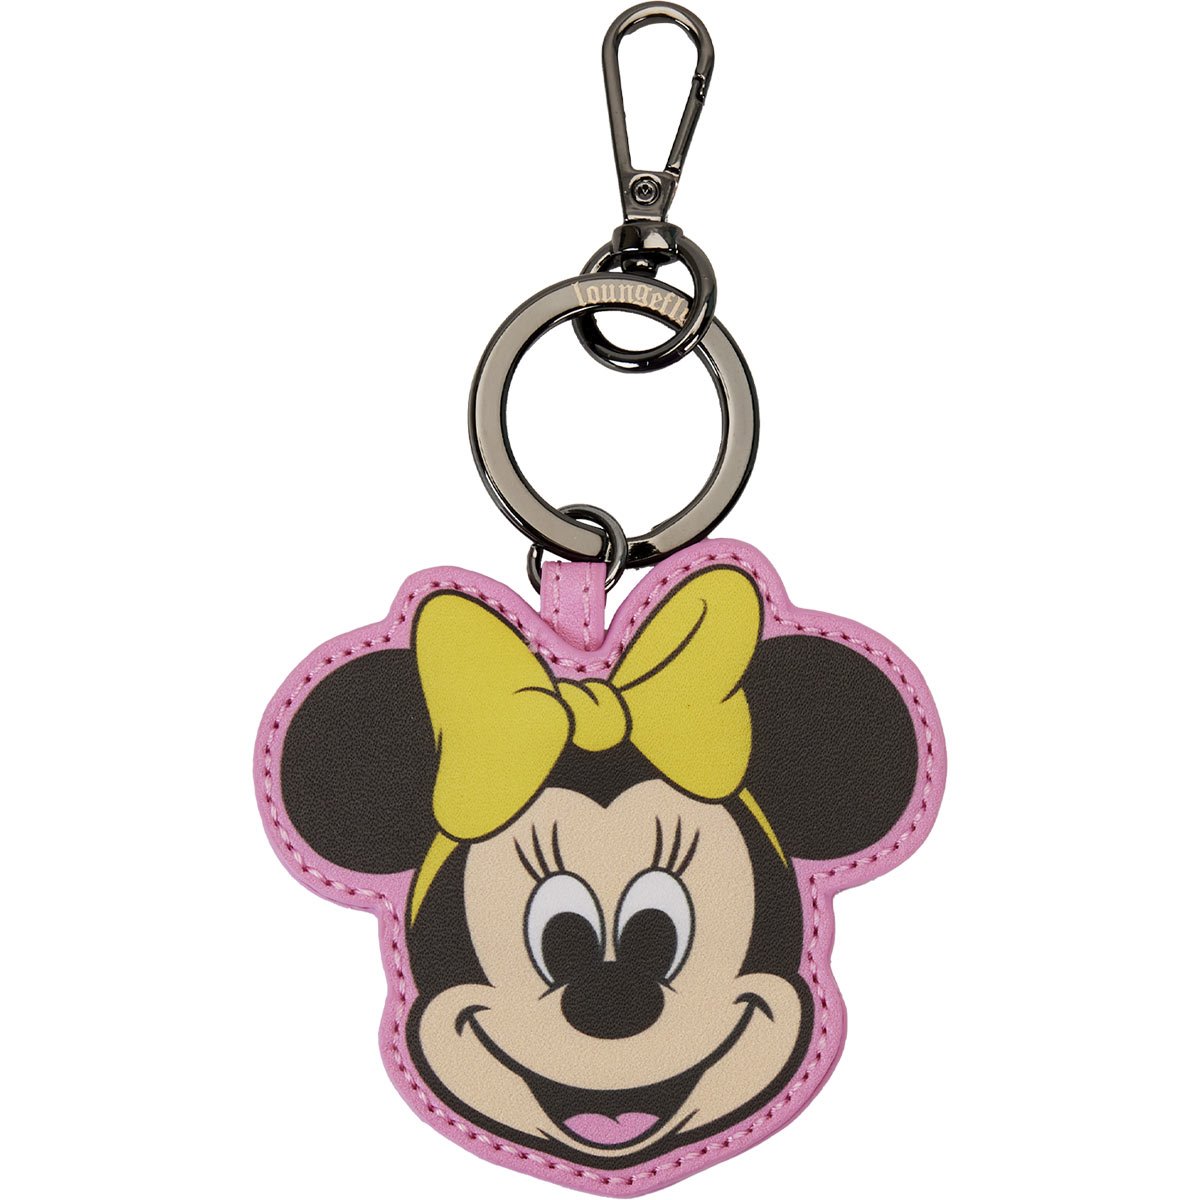 Disney Minnie Mouse Garden-Pill Coin Purse, Pink, 12 x 8.5 cm :  Amazon.co.uk: Fashion